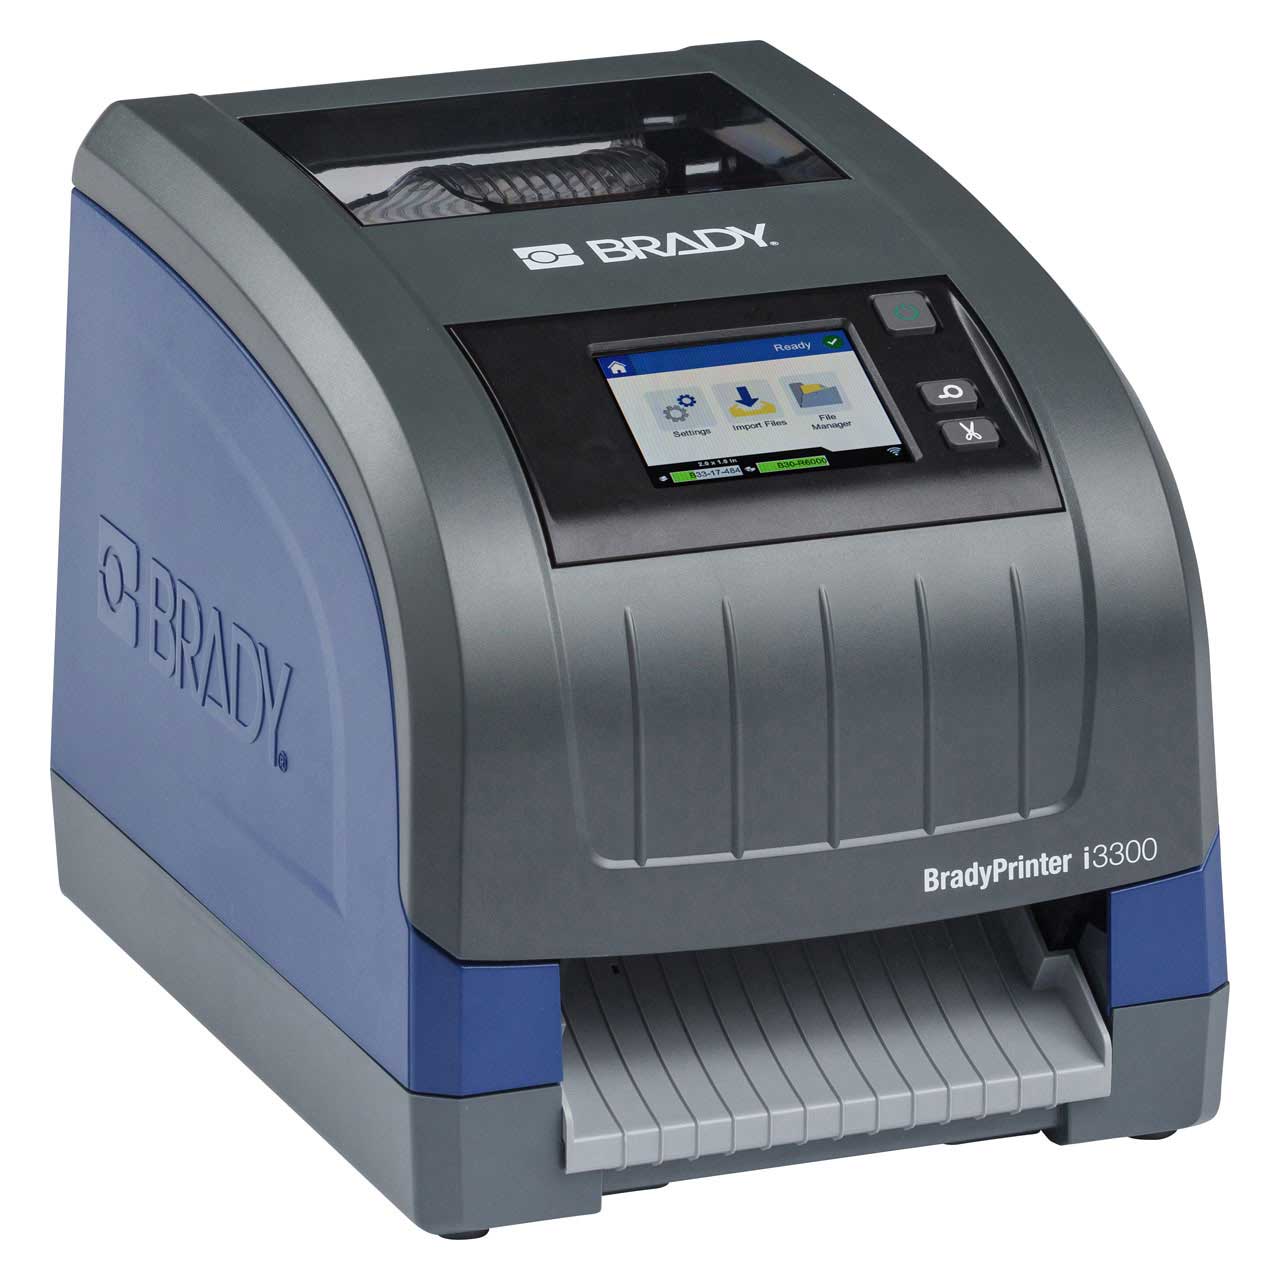 Brady 149552 Printer i3300 Industrial Label Printer with Wi-Fi 149552